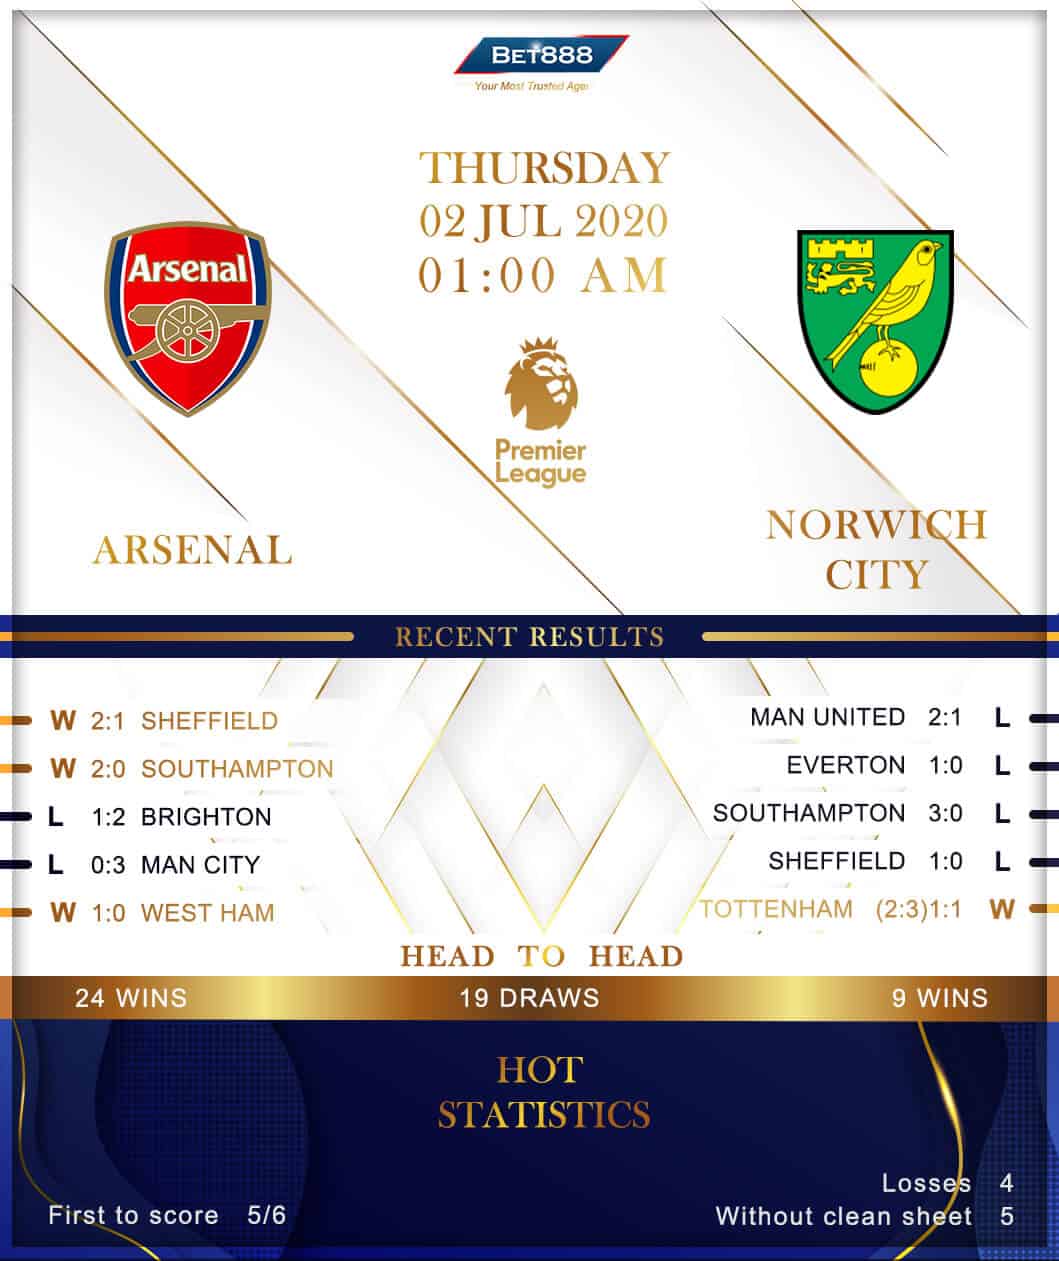 Arsenal vs Norwich City 02/07/20